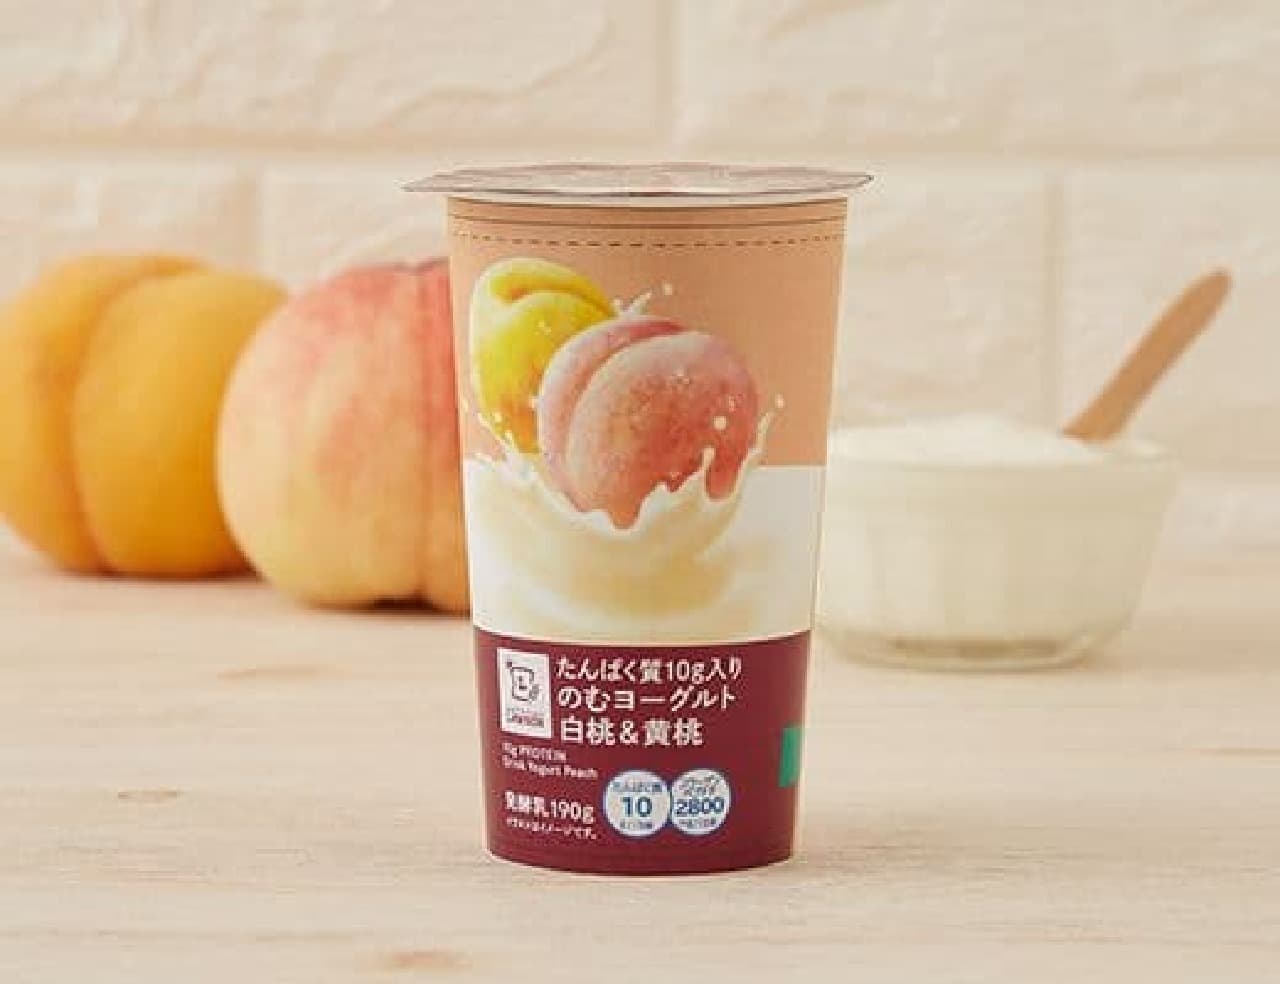 LAWSON "Nomi Yogurt with 10g of Protein - White Peach & Yellow Peach 190g